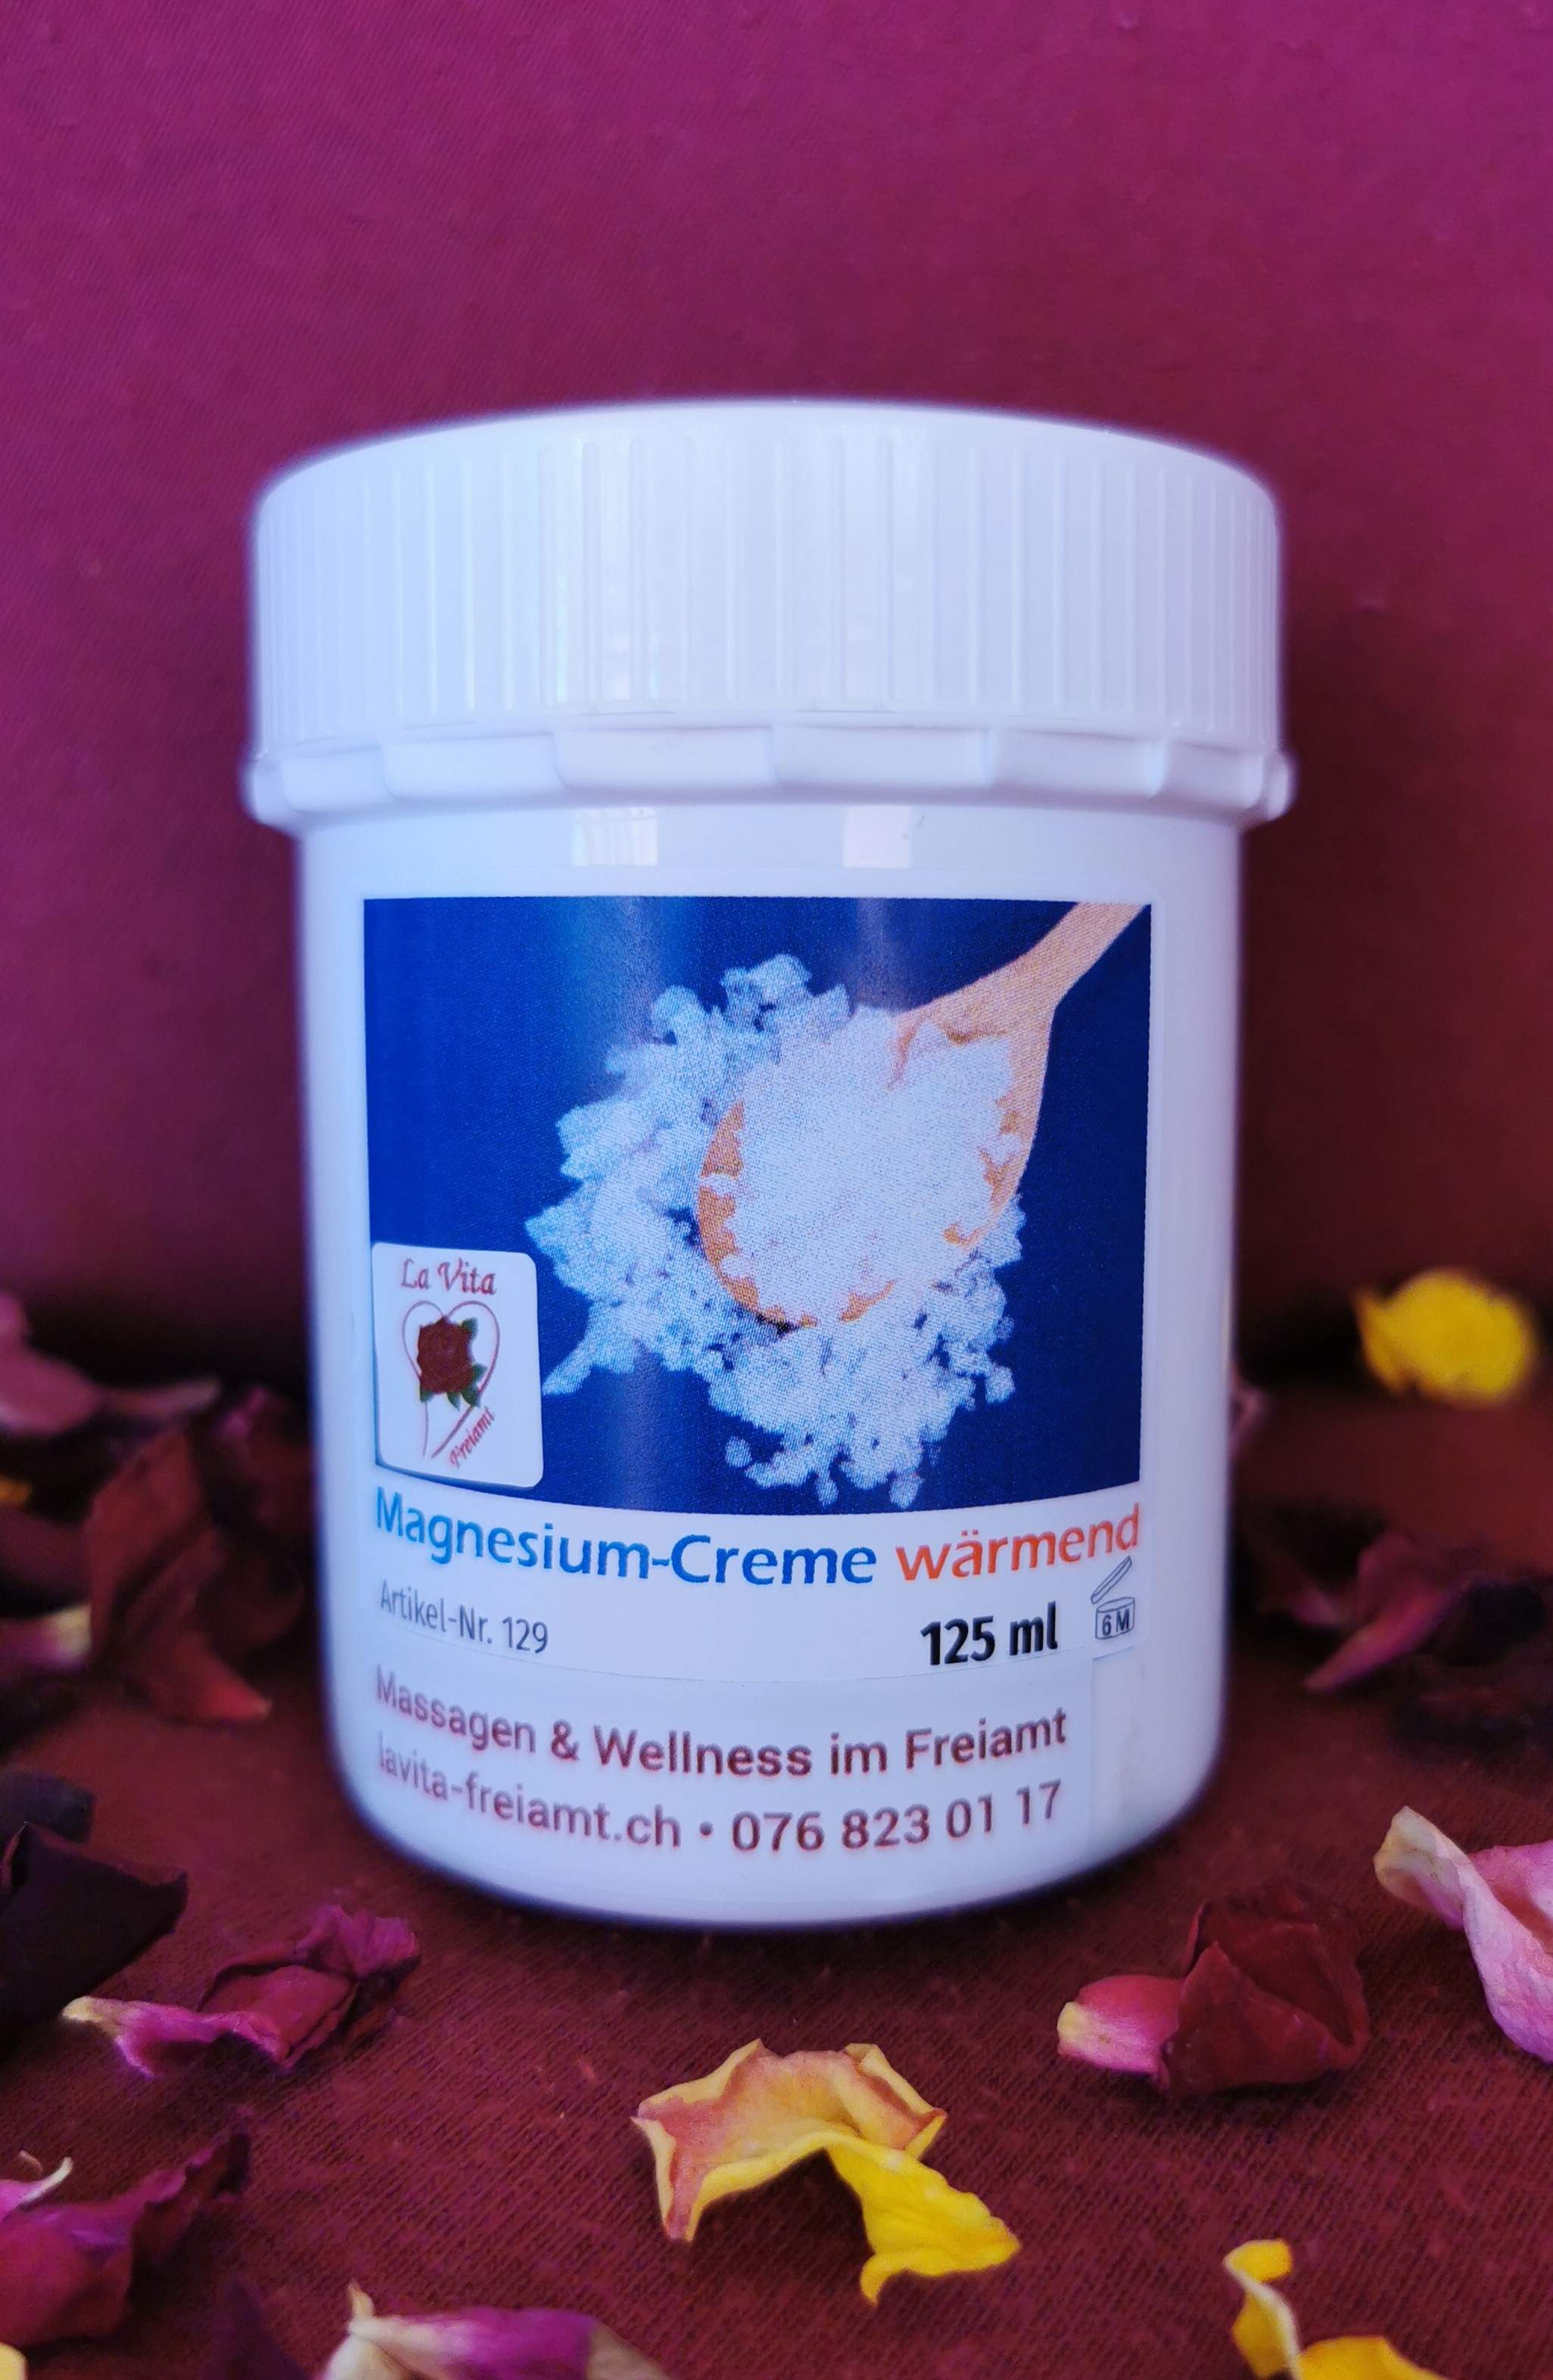 Magnesium-Creme wärmend